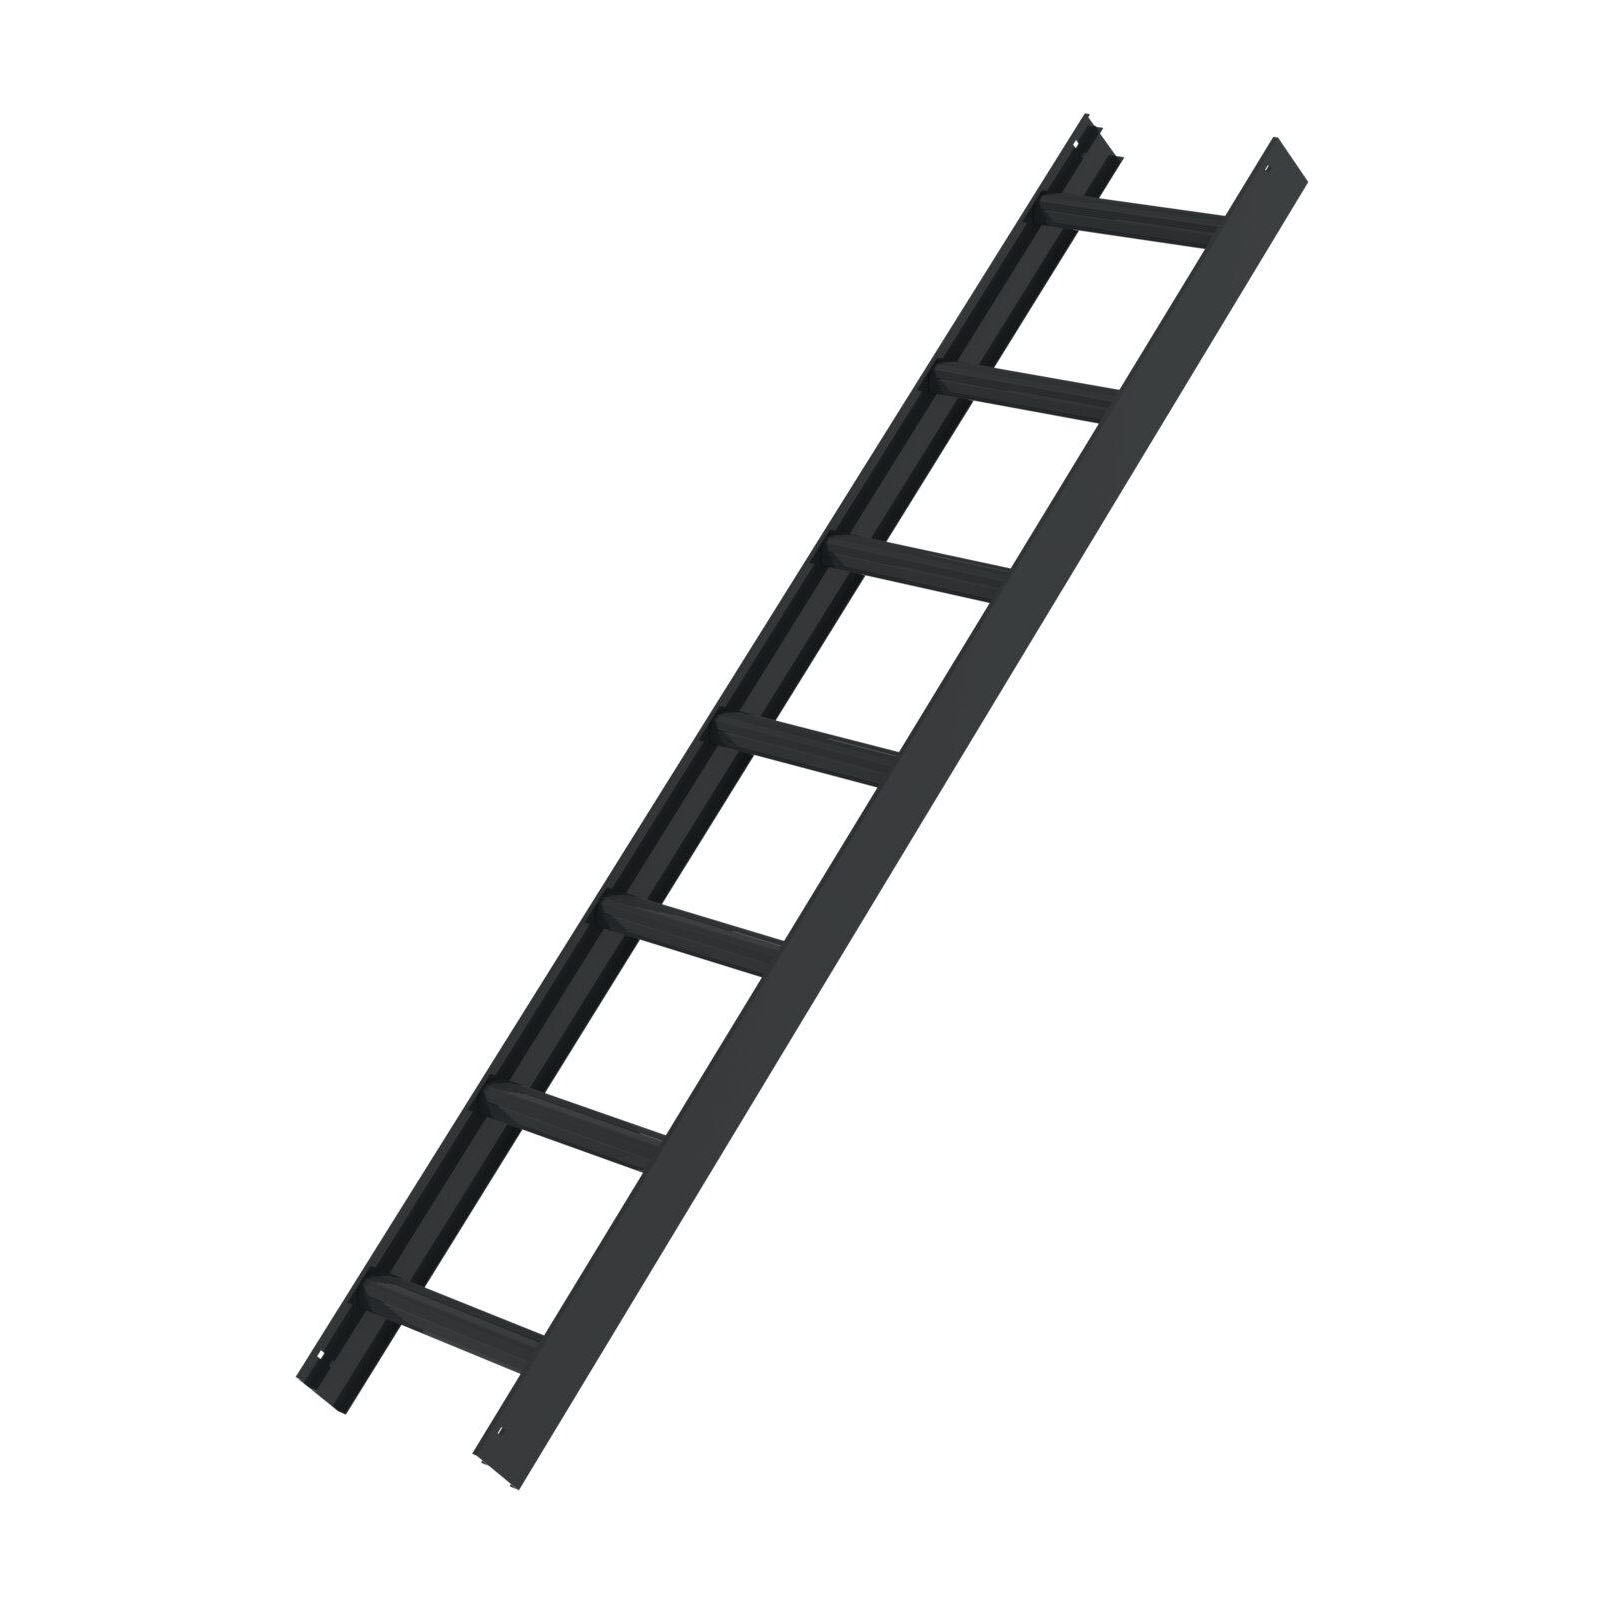 Лестница для крыши из алюминия цвета серый антрацит 1.96 м 7 ступеней Munk 011197